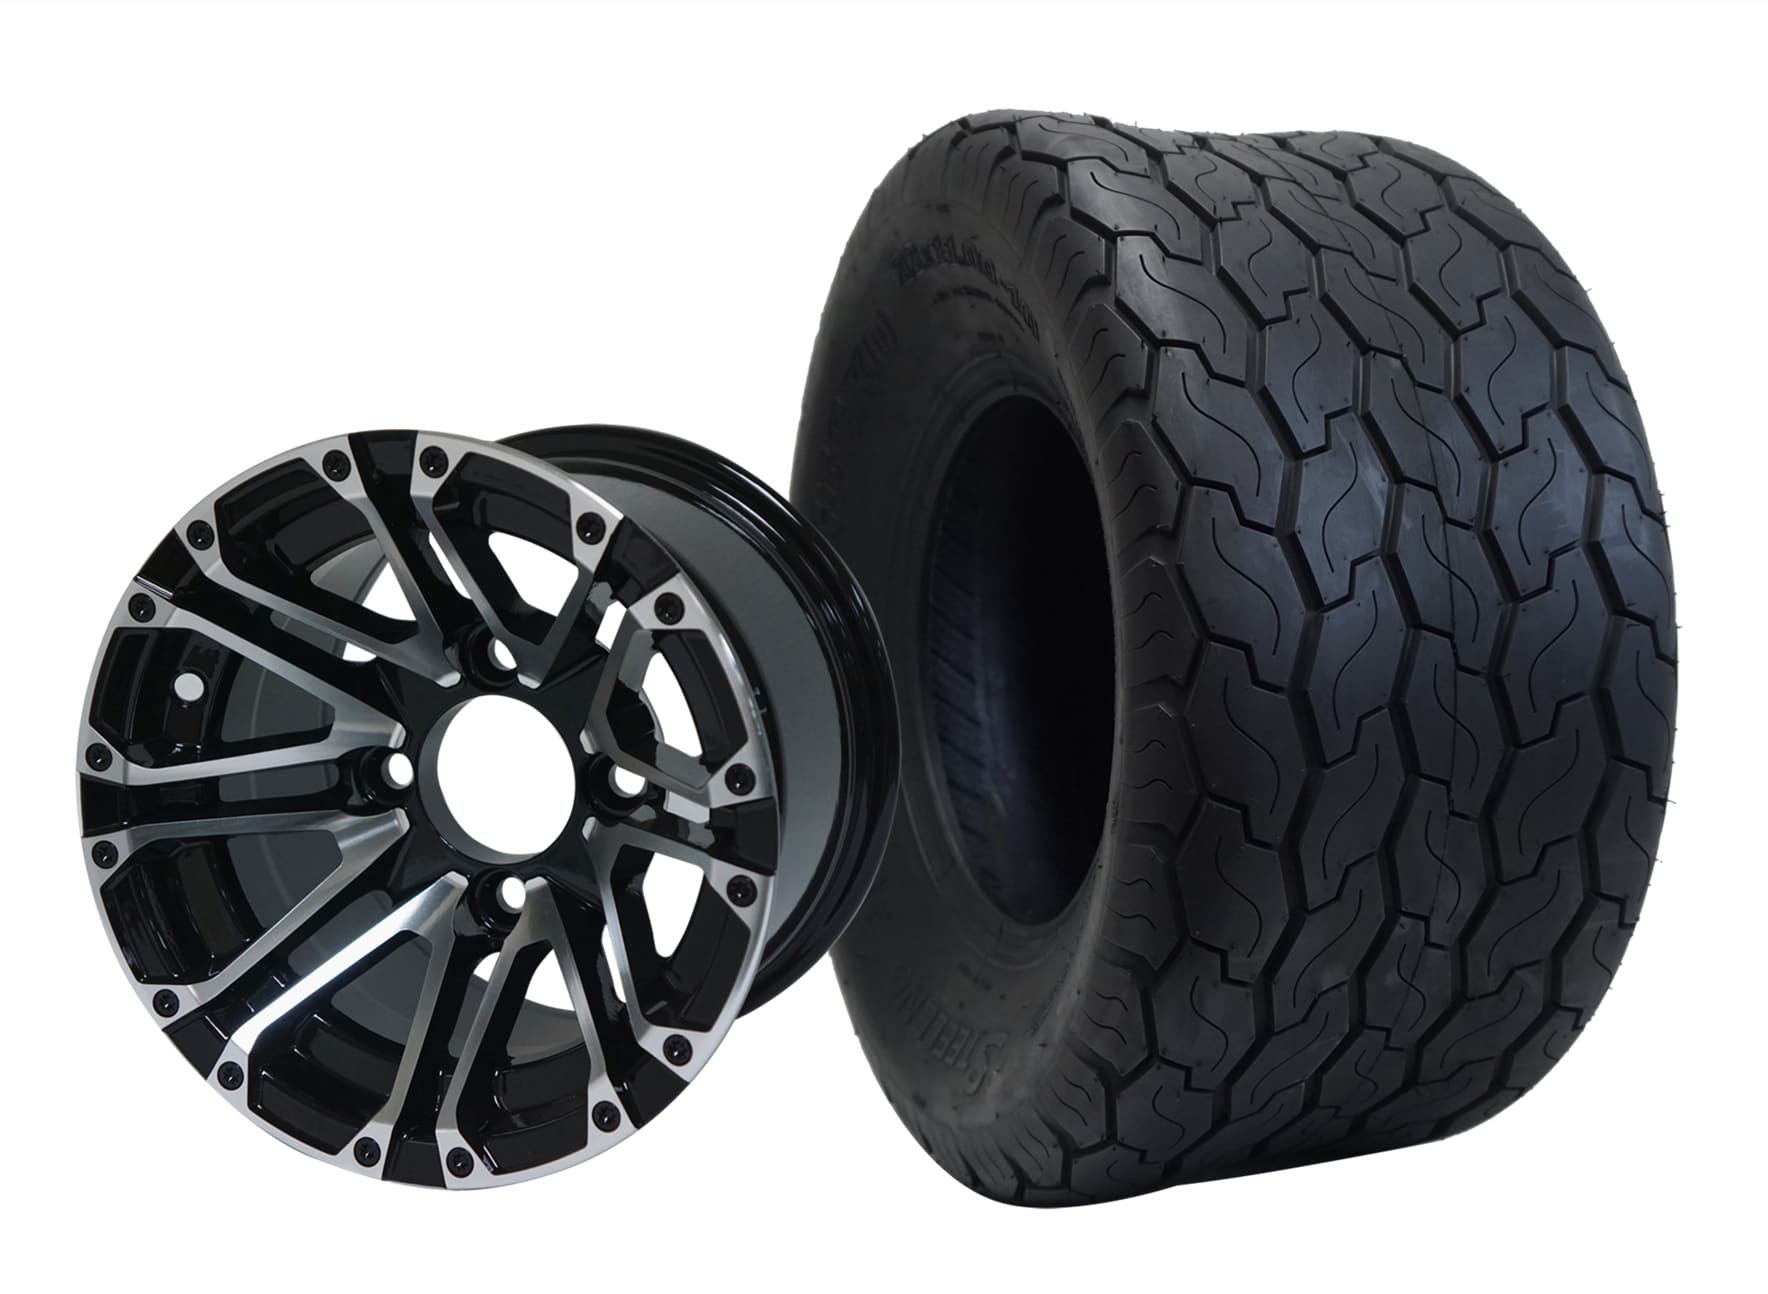 BNDL-TR1001-WH1006-CC0001-LN0001 10" Lancer Machined Black Wheel Aluminum Alloy & 18"x9"-10" Gecko All Terrain Tire x4